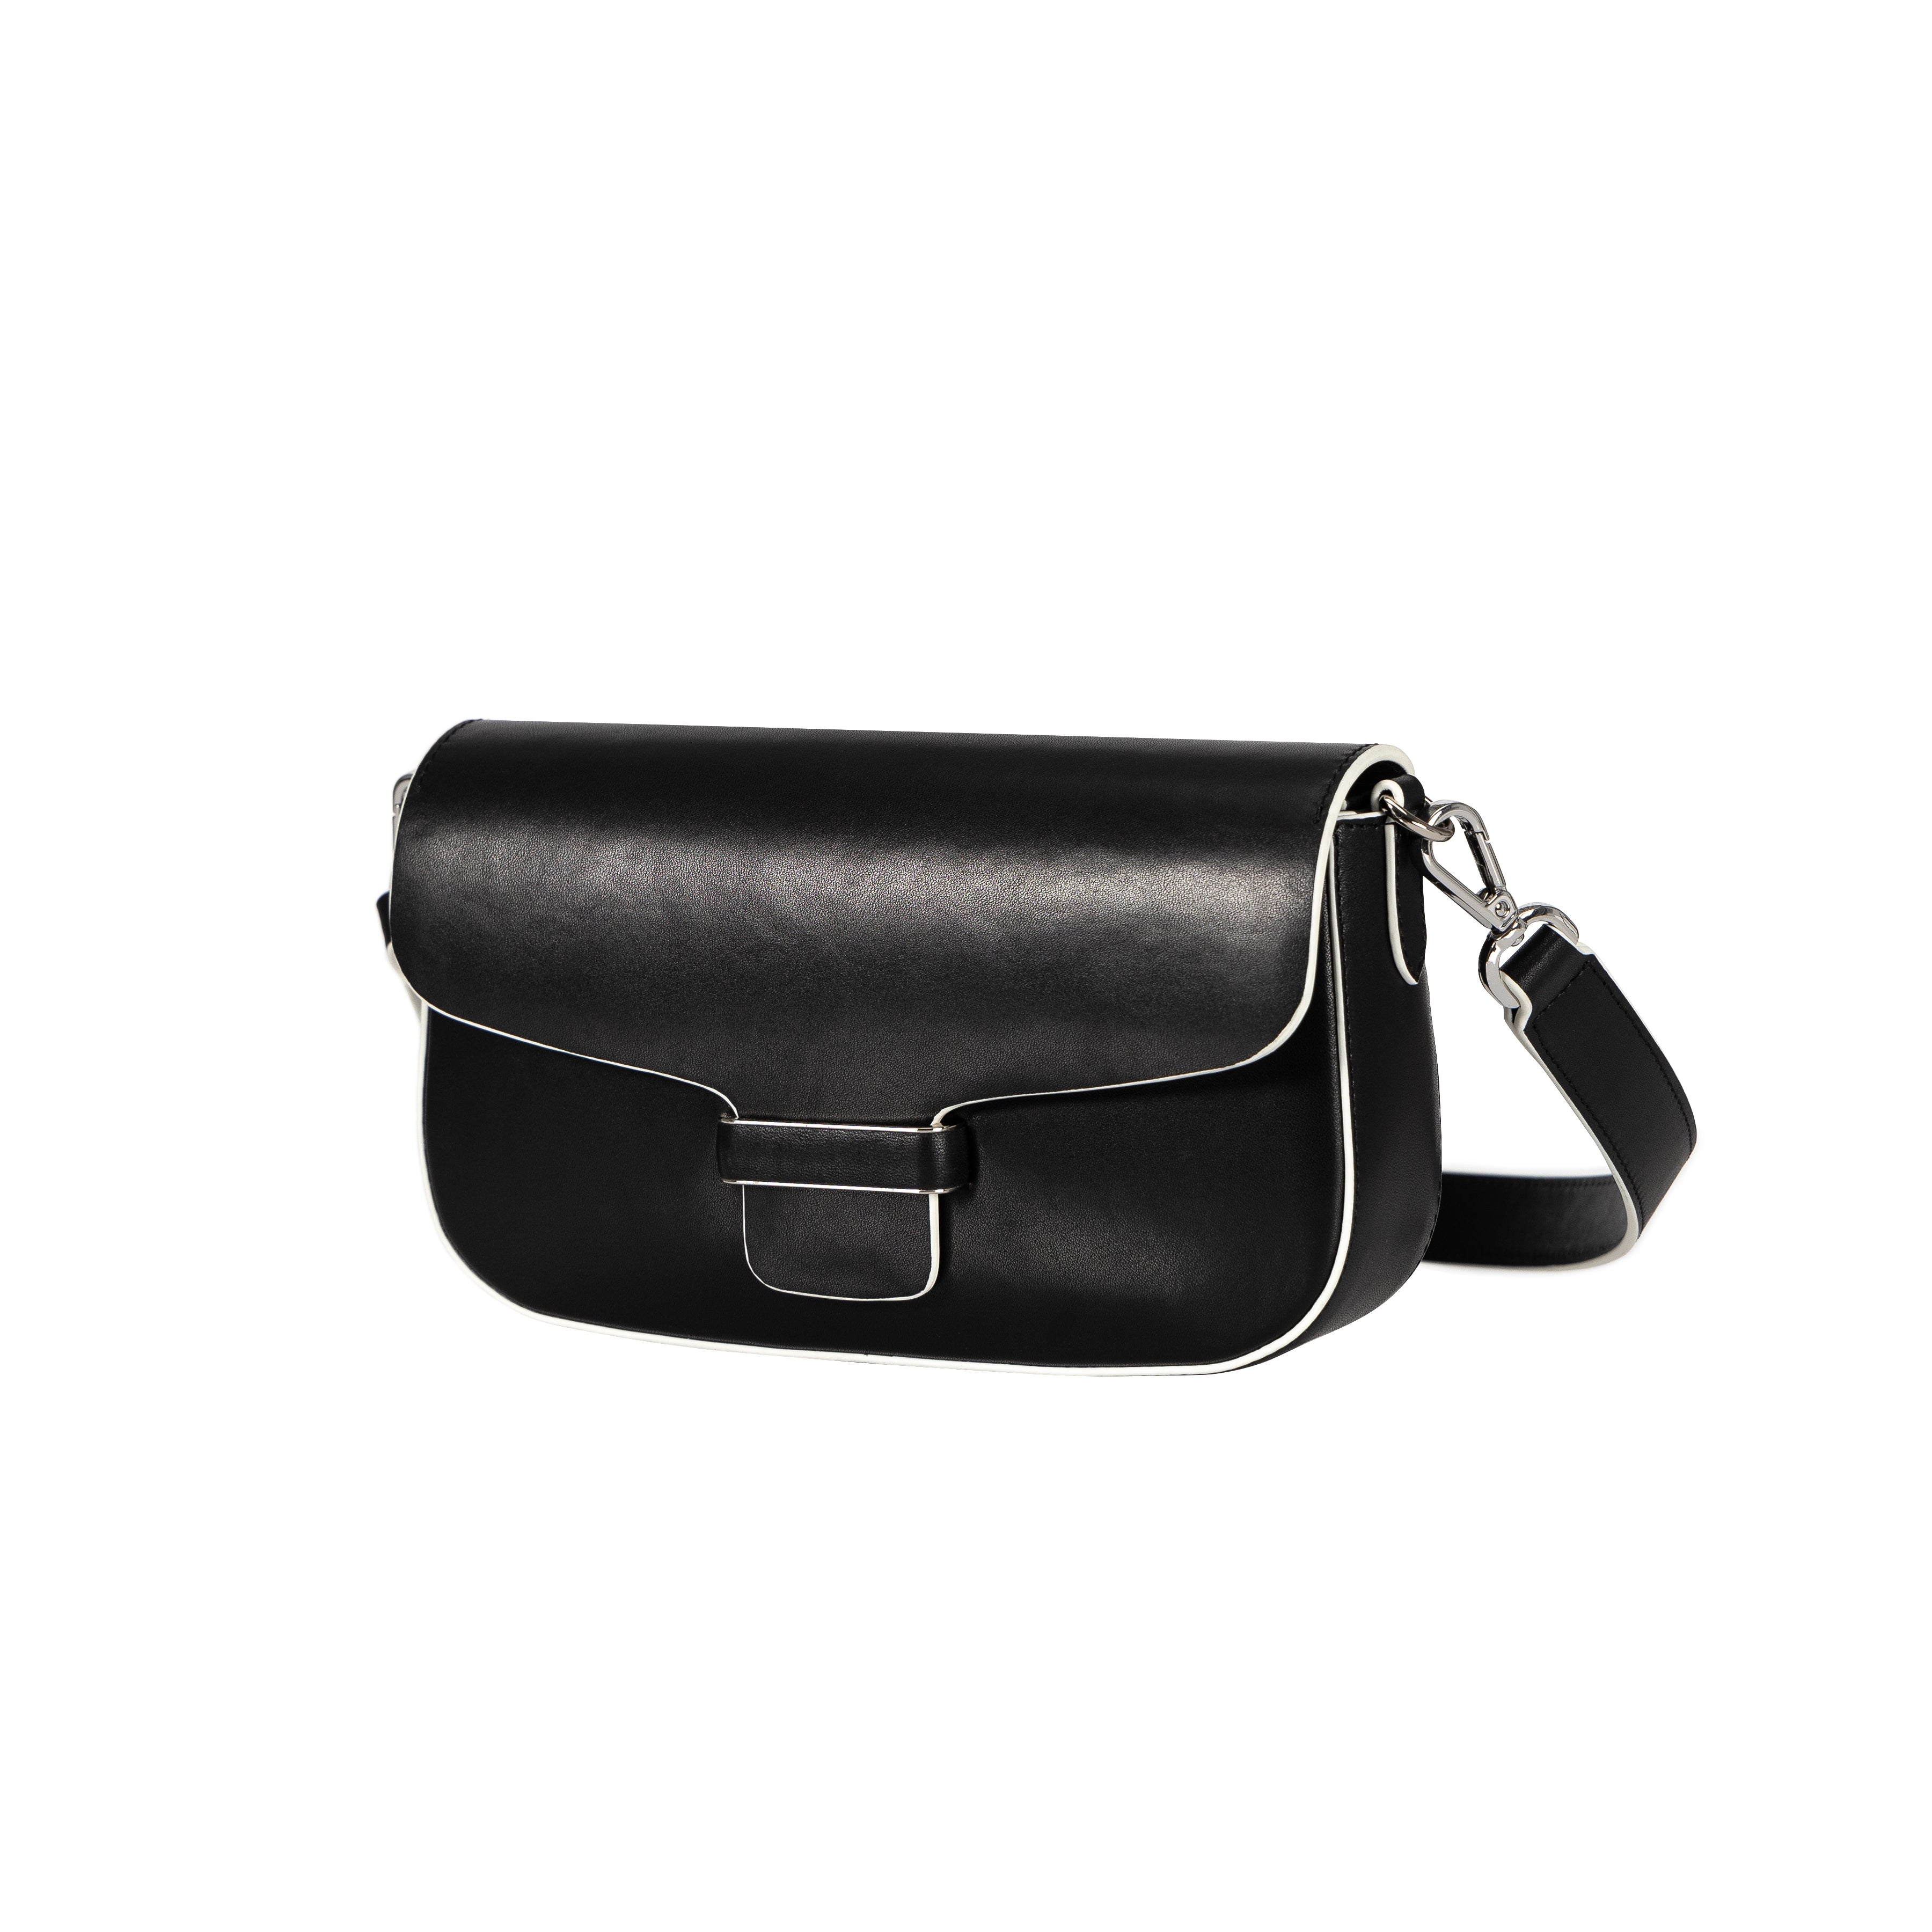 Ladies shoulder bag genuine leather simple small square bag